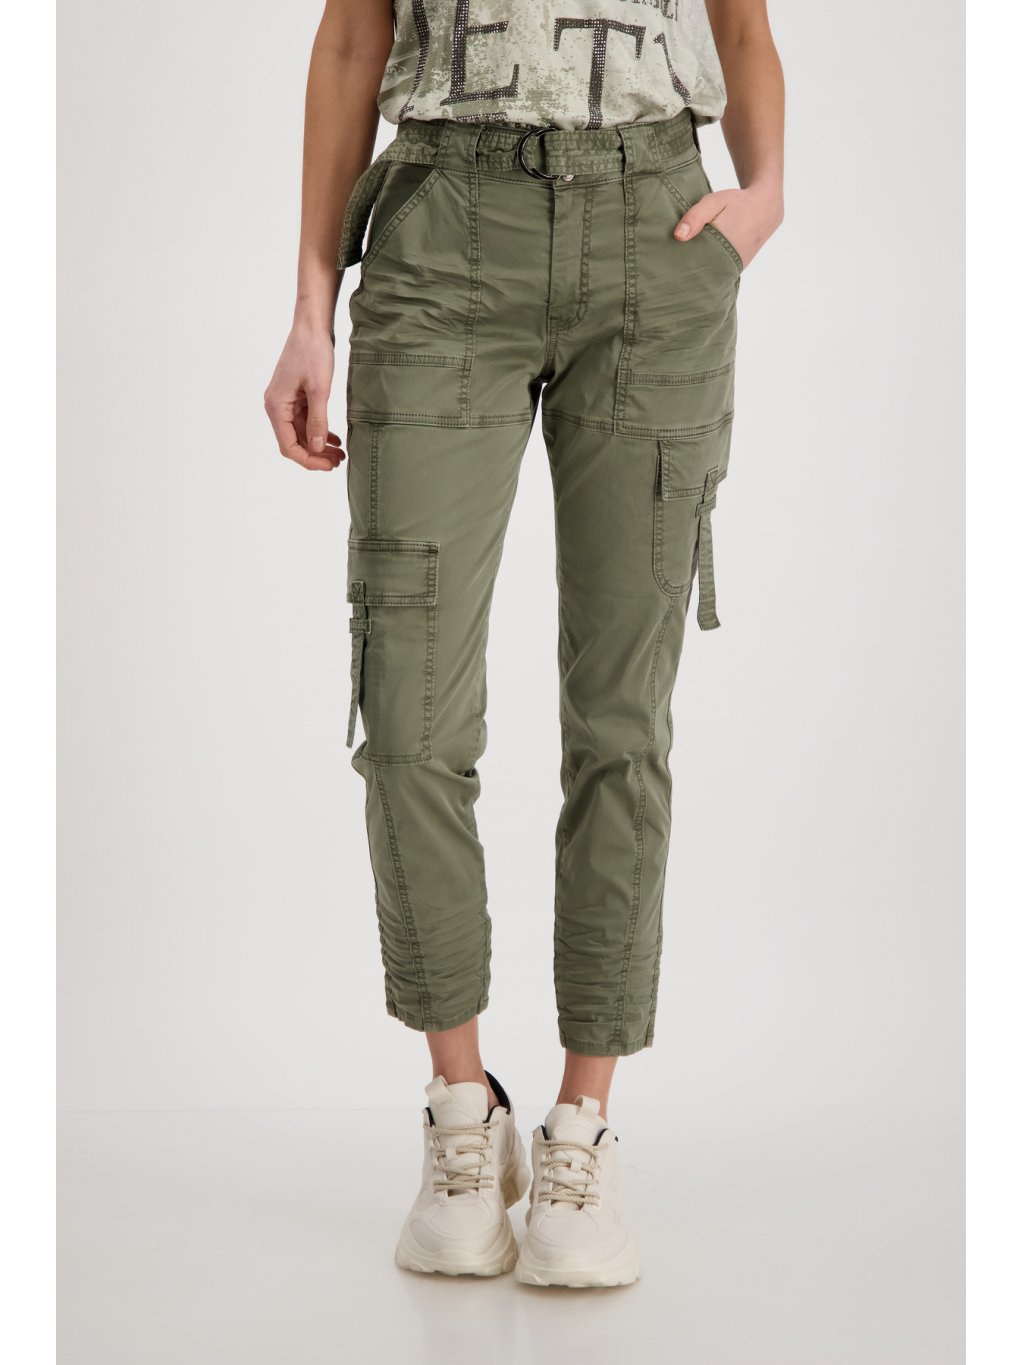 Kalhoty Monari 6987 zelené cargo styl